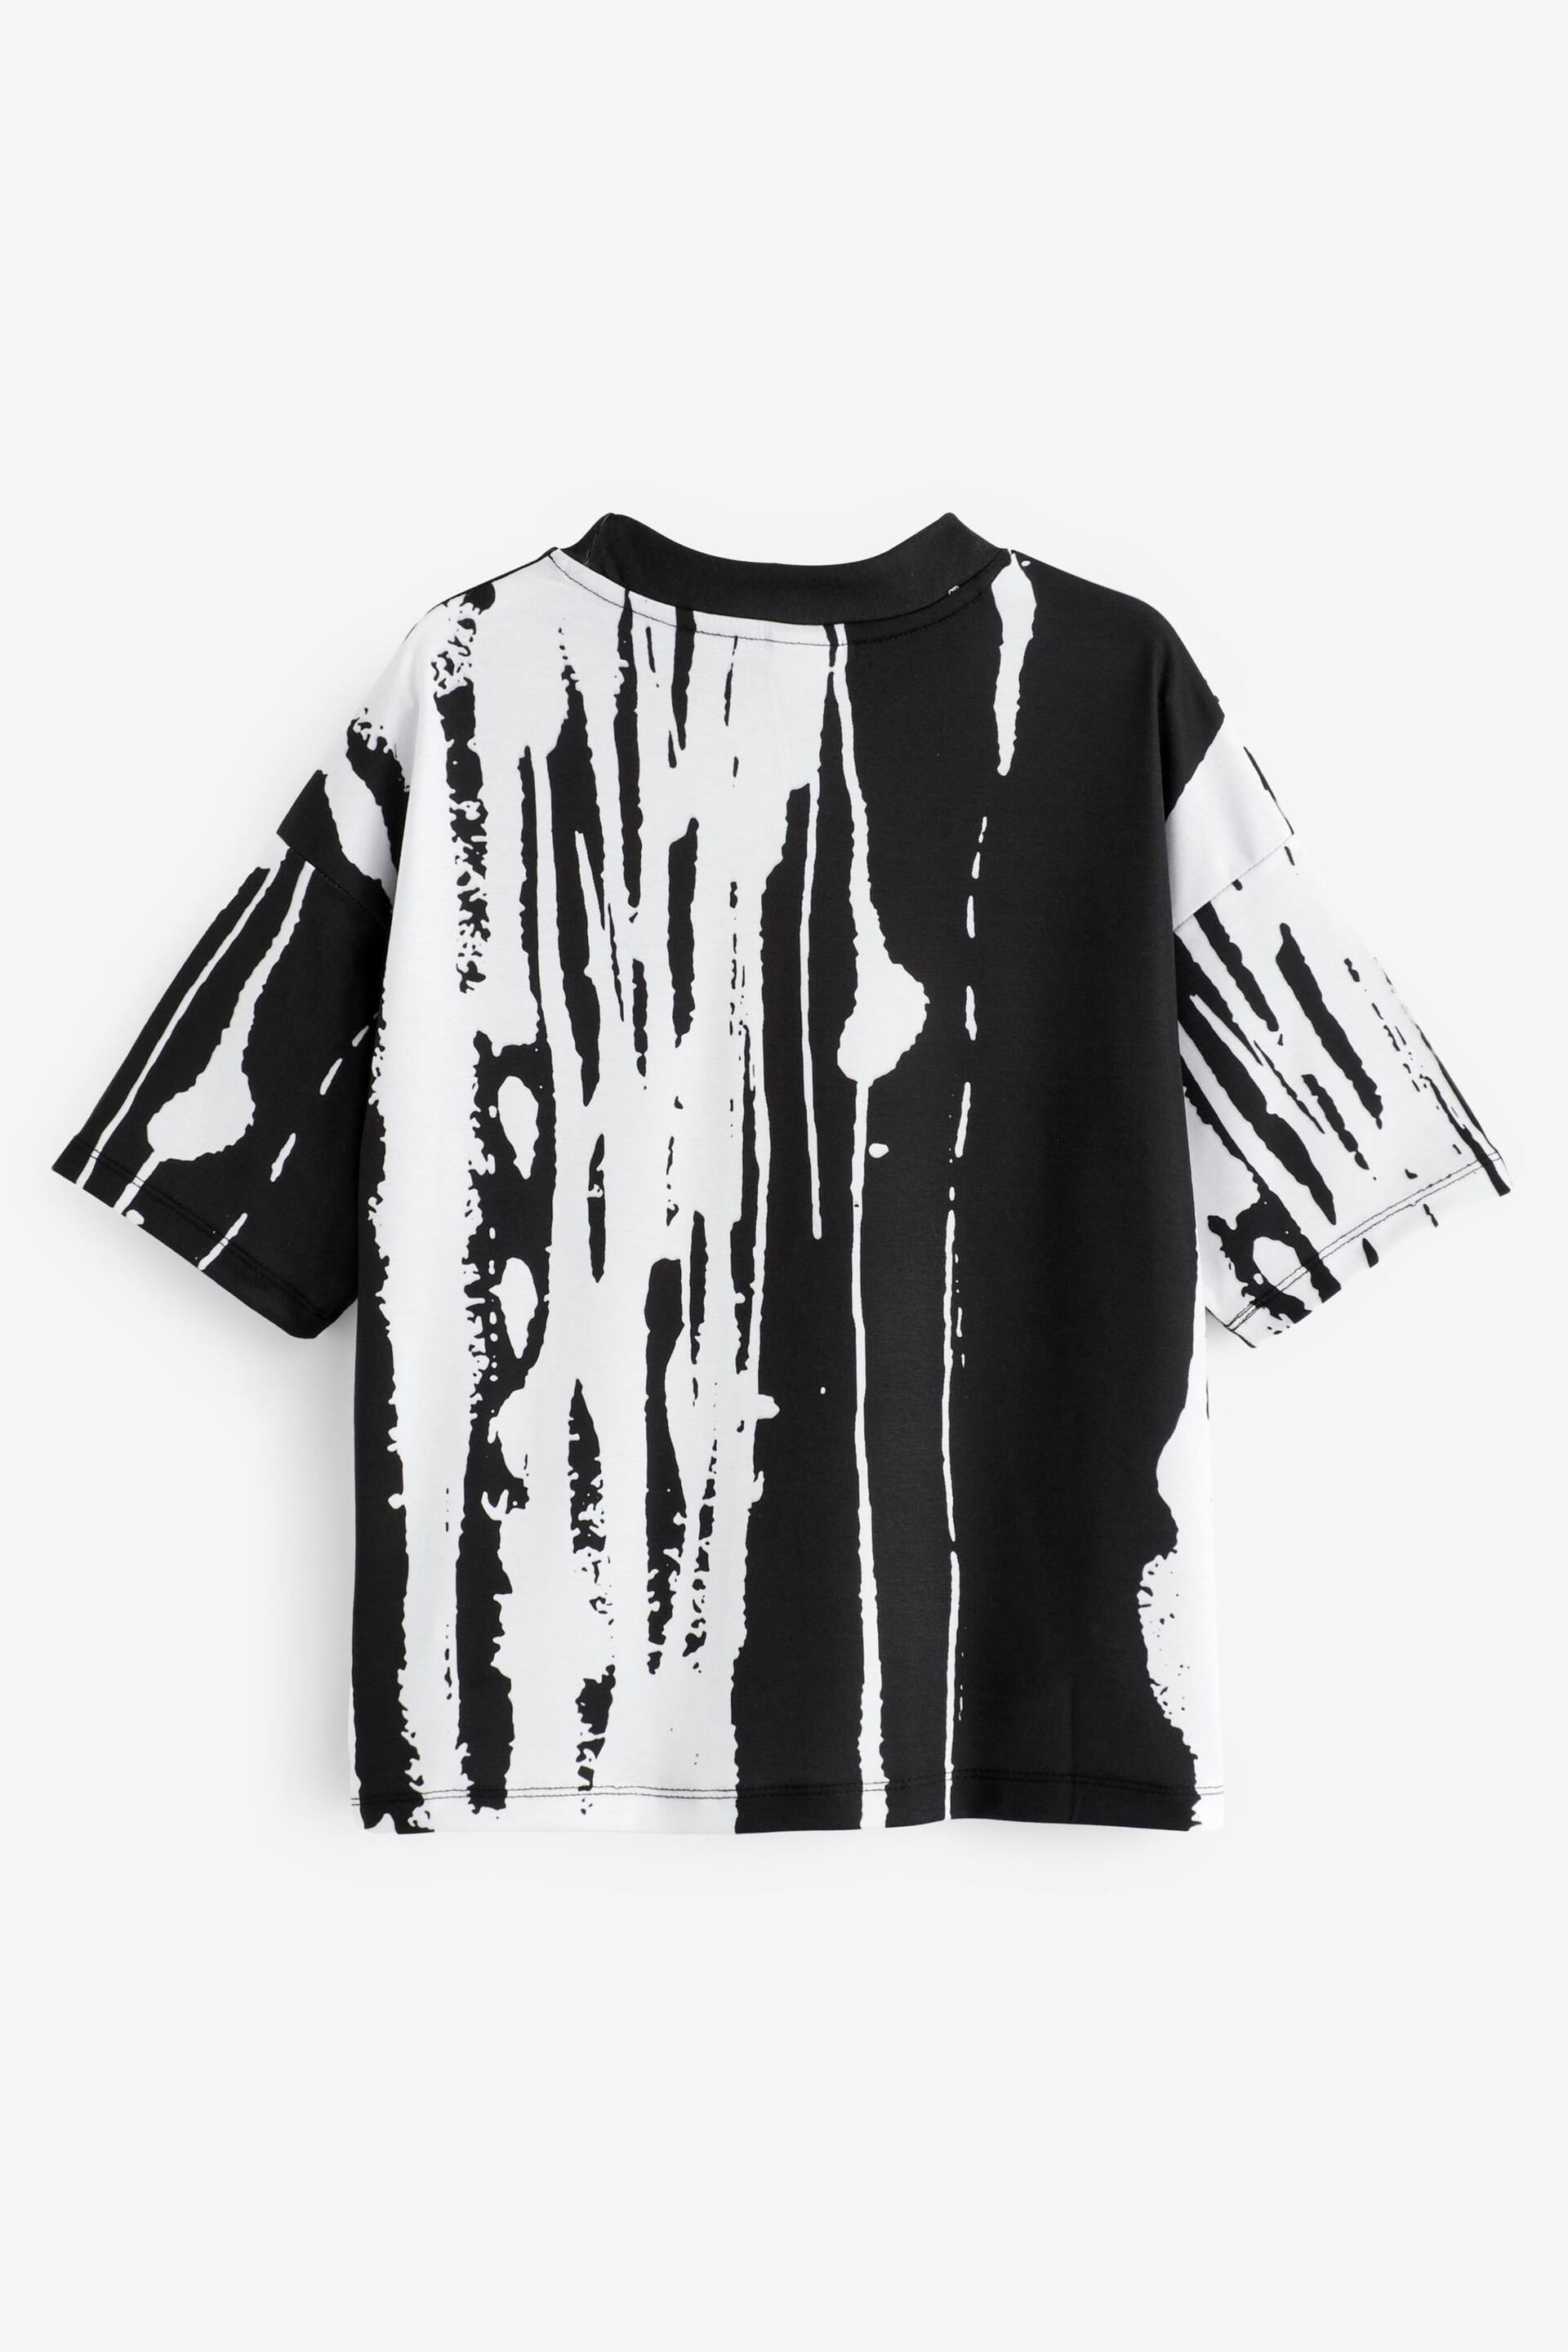 Hype. Boys Black Multi Paint Run T-Shirt - Image 7 of 8